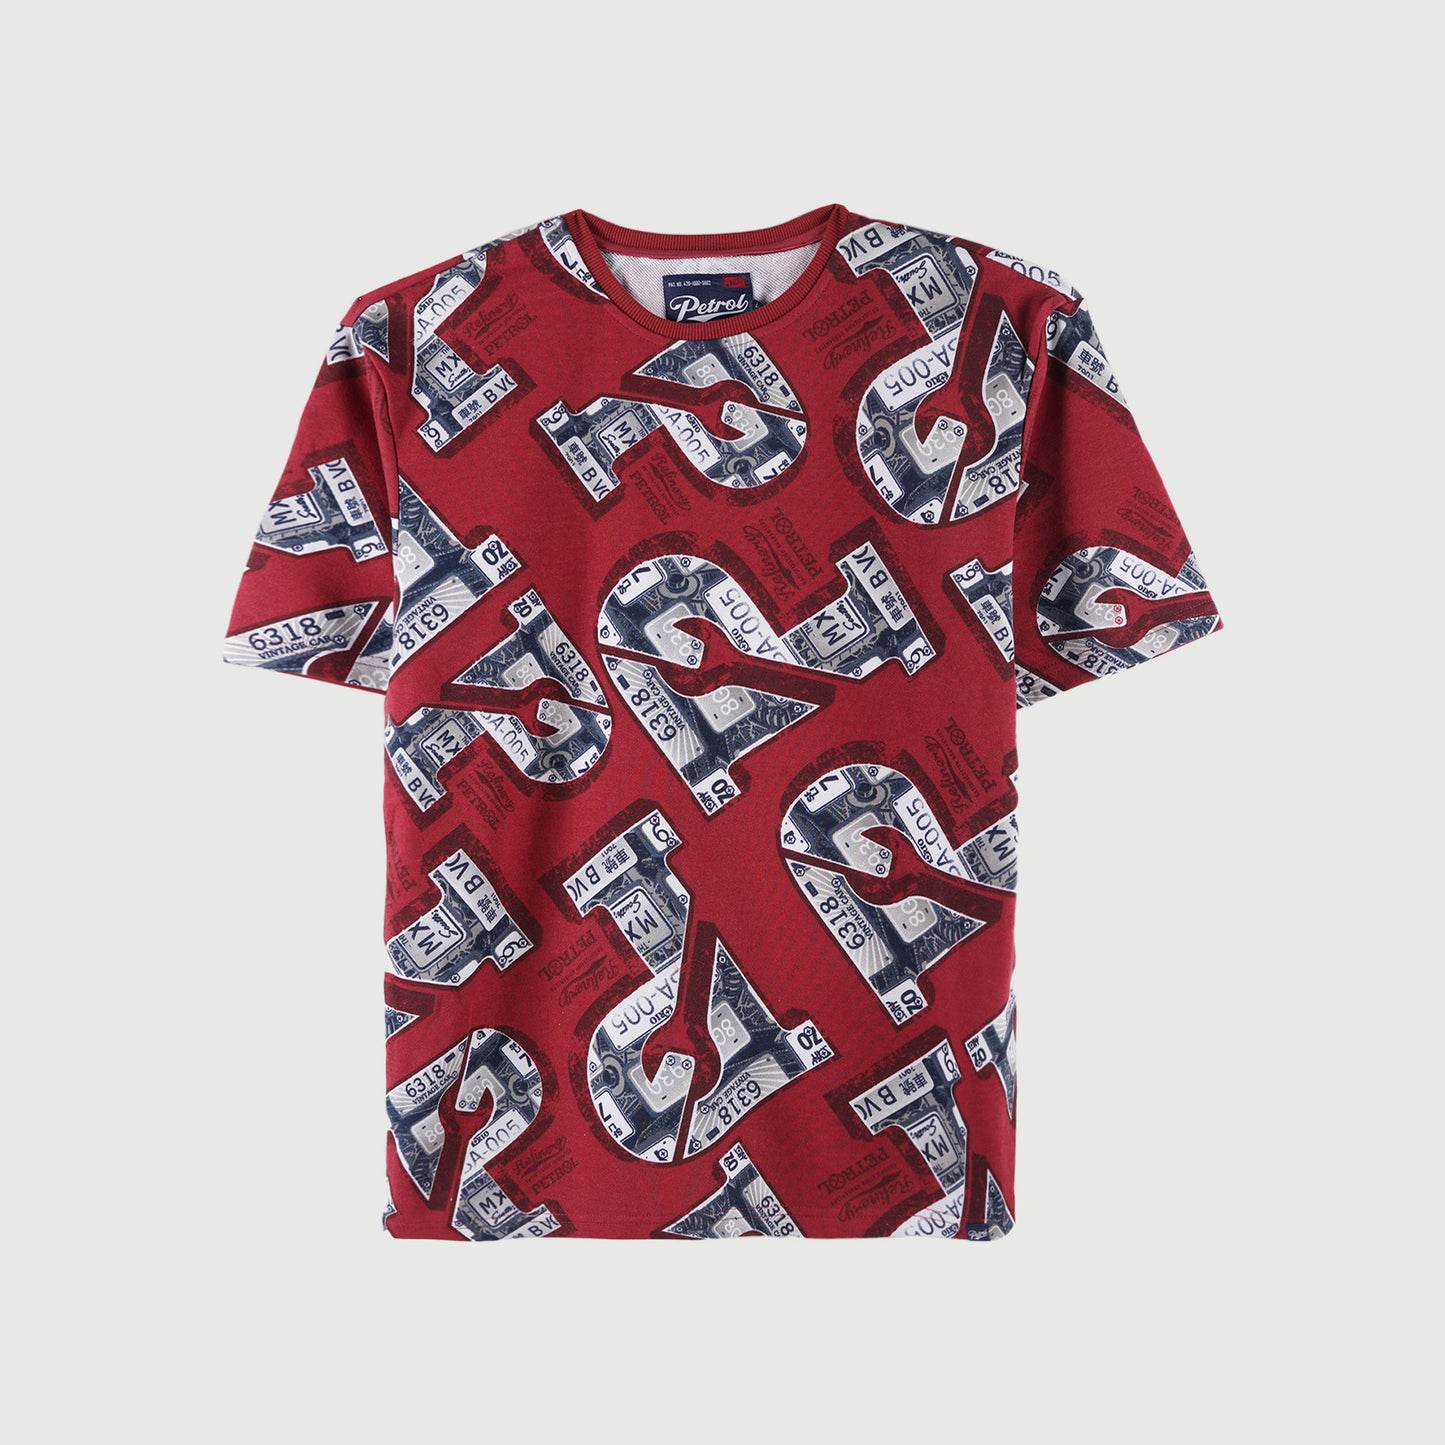 Petrol Basic Tees for Men Oversized Boxy Fitting Shirt Fashionable Trendy fashion Casual Top Crimson T-shirt for Men 115875 (Crimson)